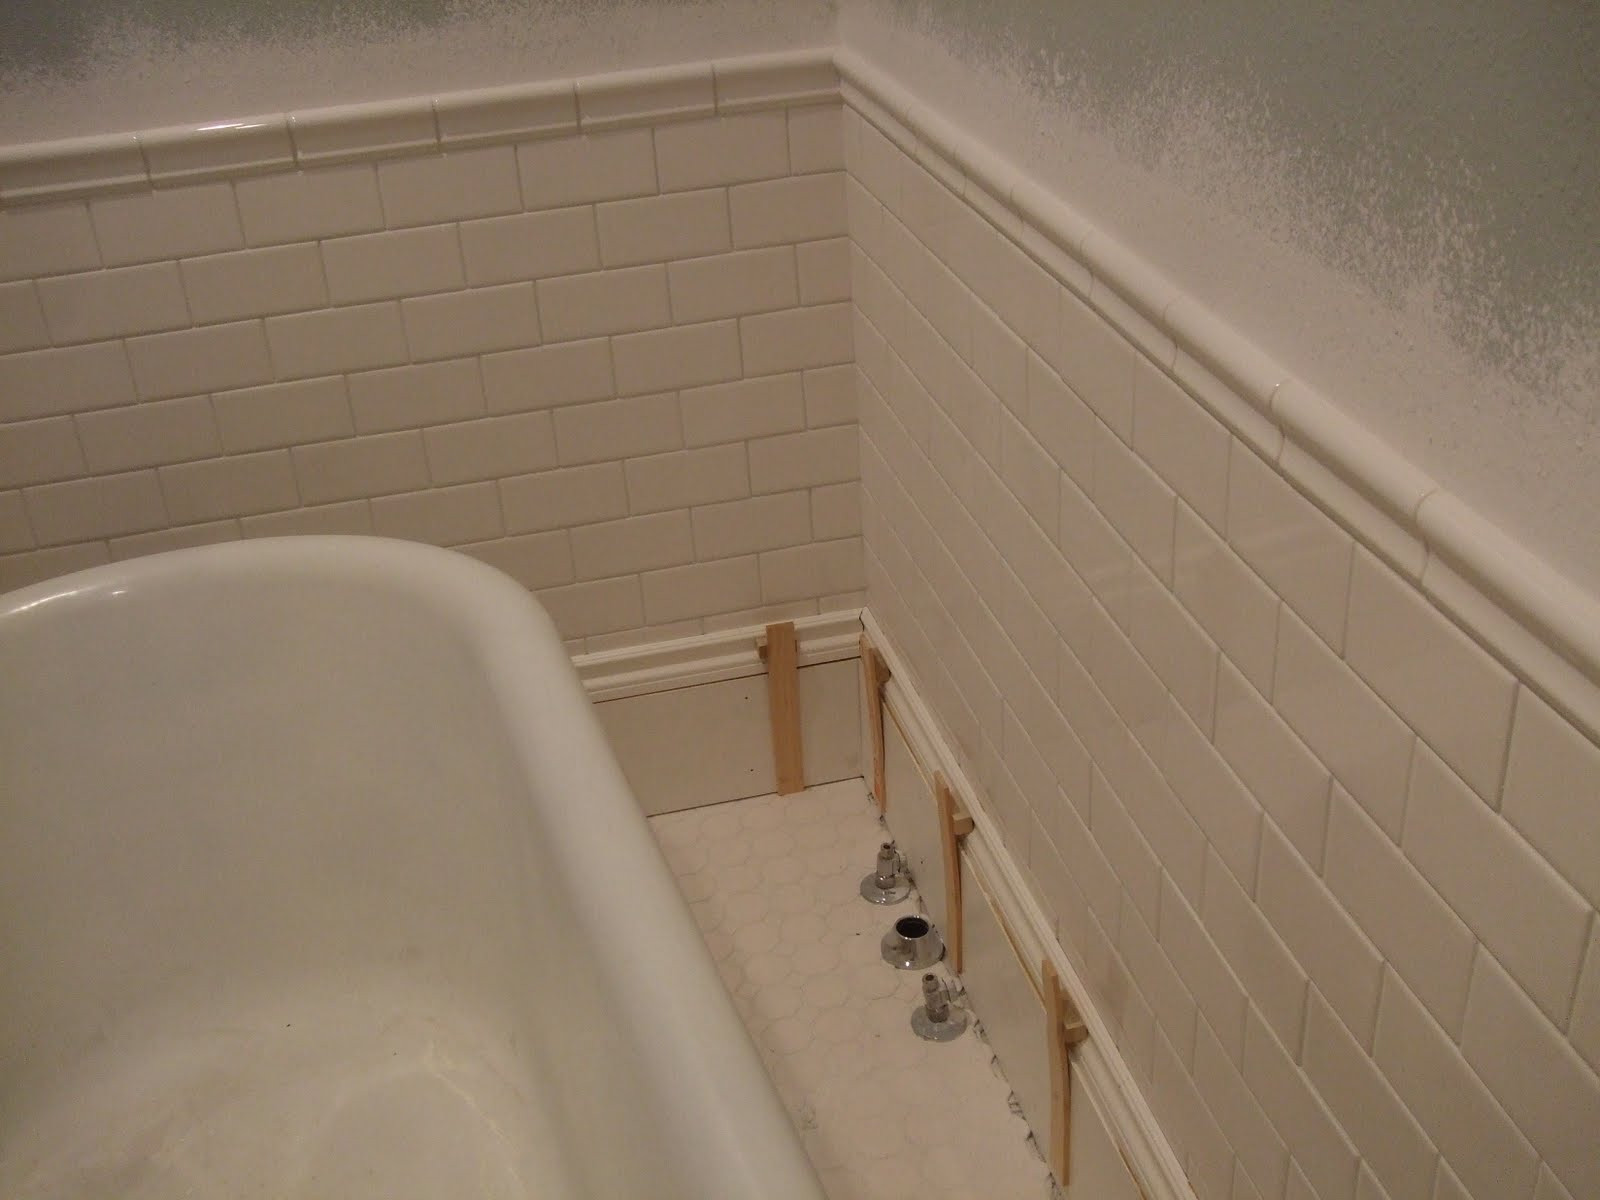 Tile Baseboard In Bathroom
 The Smiths Bathroom Baseboard